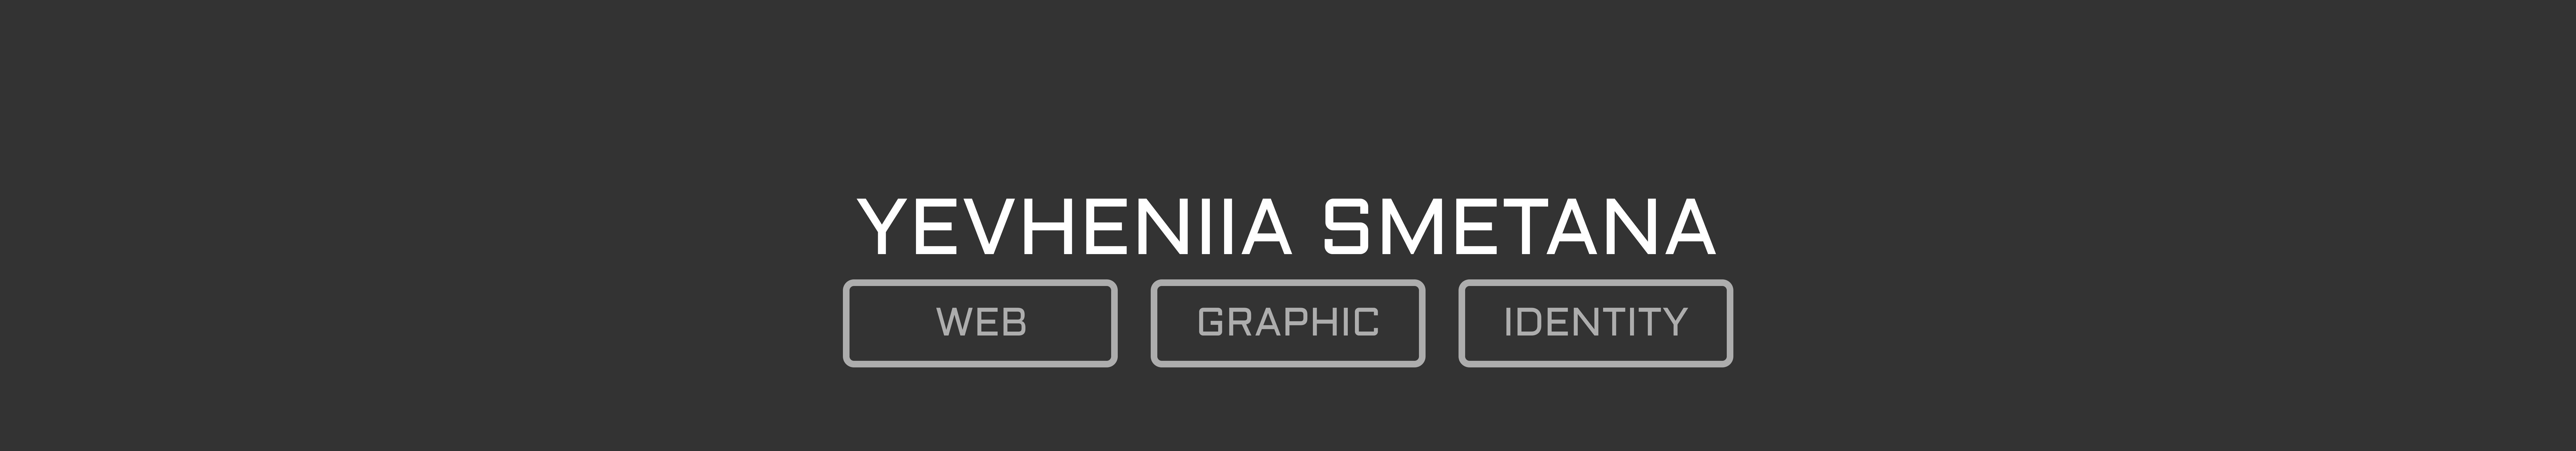 Yevheniia Smetana のプロファイルバナー